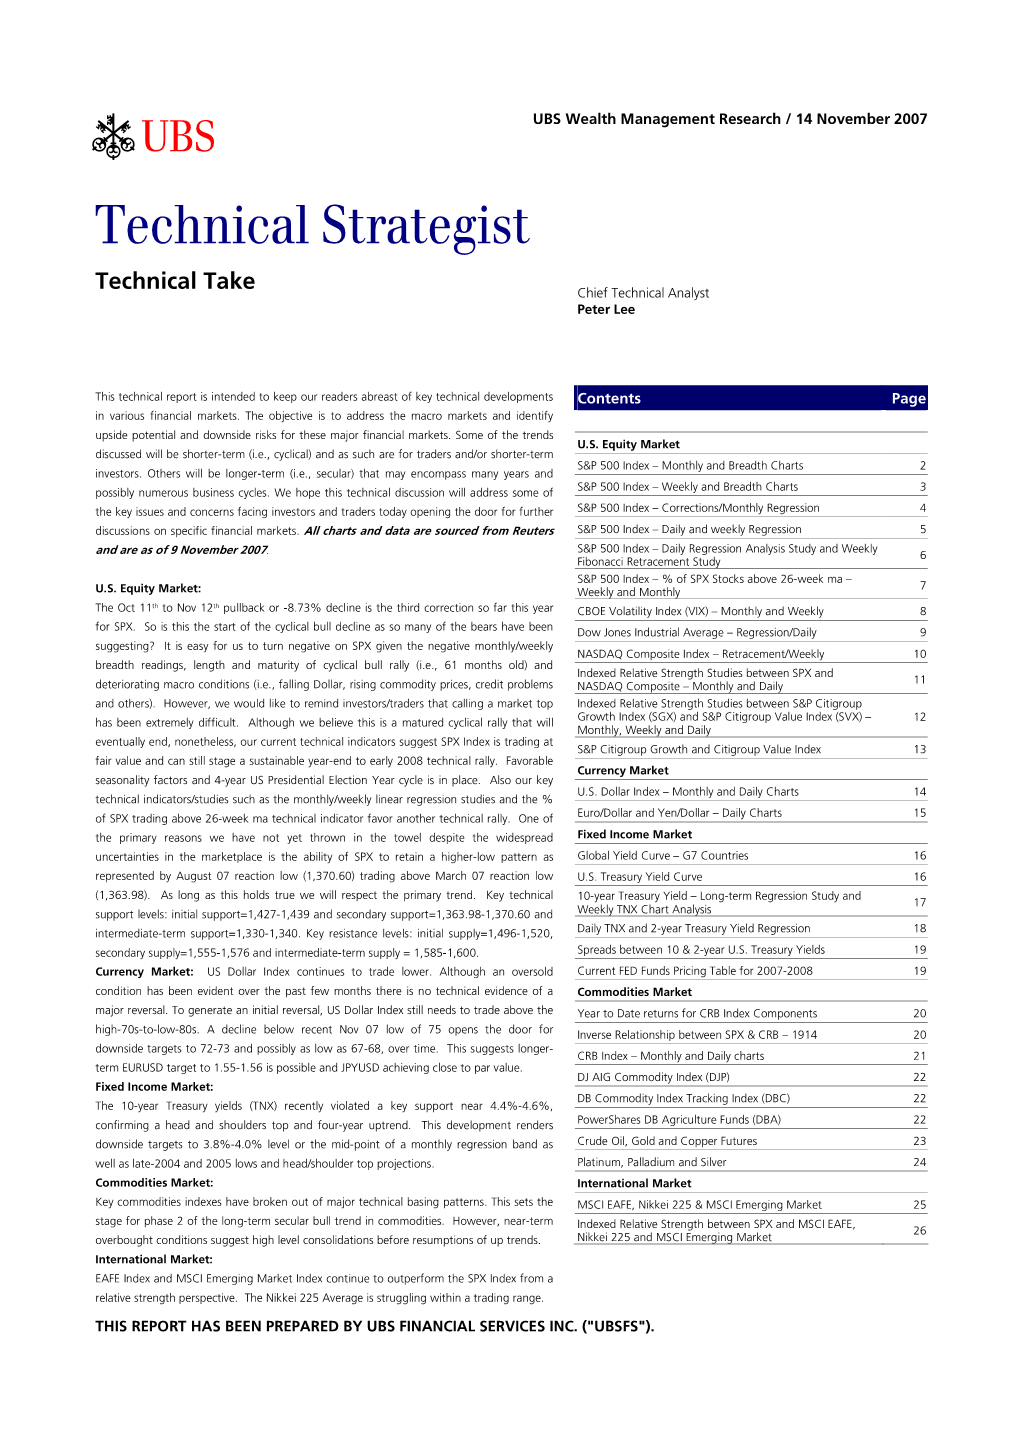 Technical Strategist